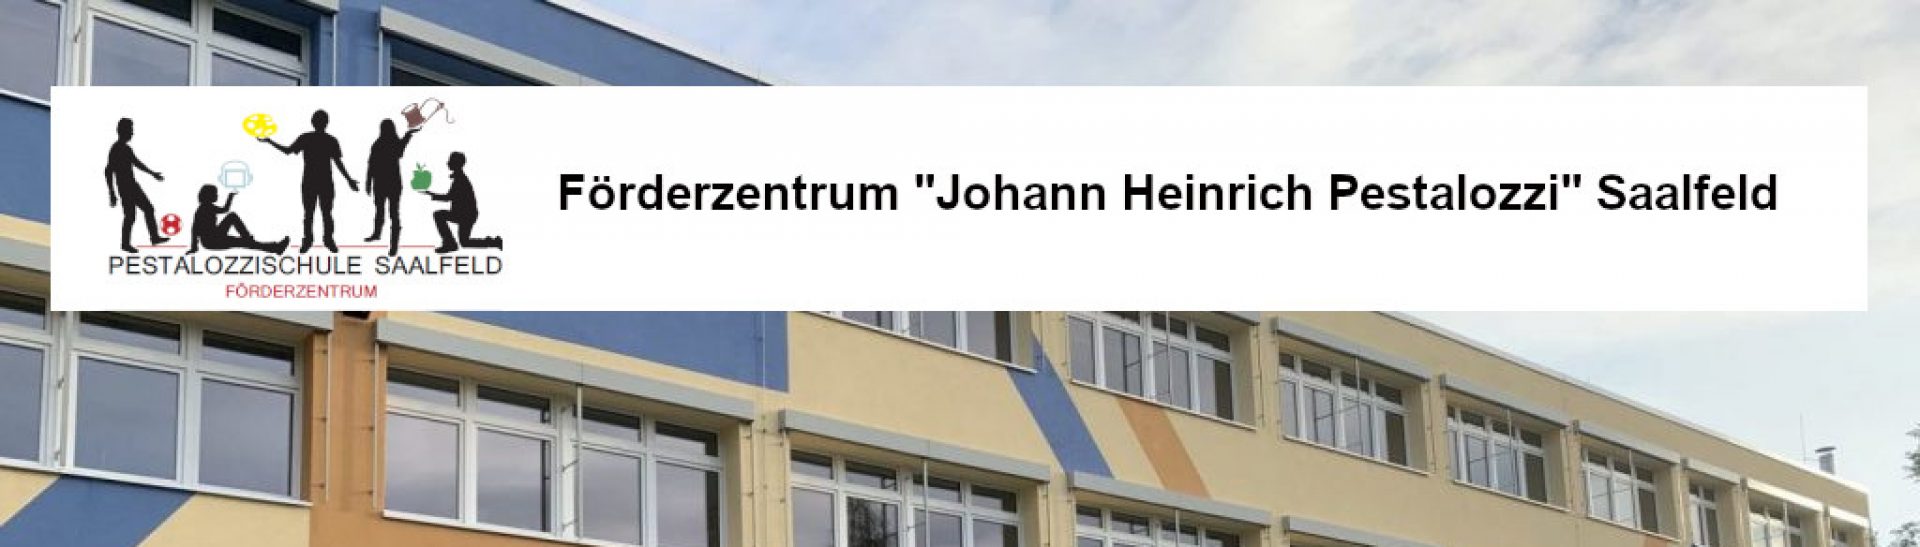 Förderzentrum "Johann Heinrich Pestalozzi" Saalfeld